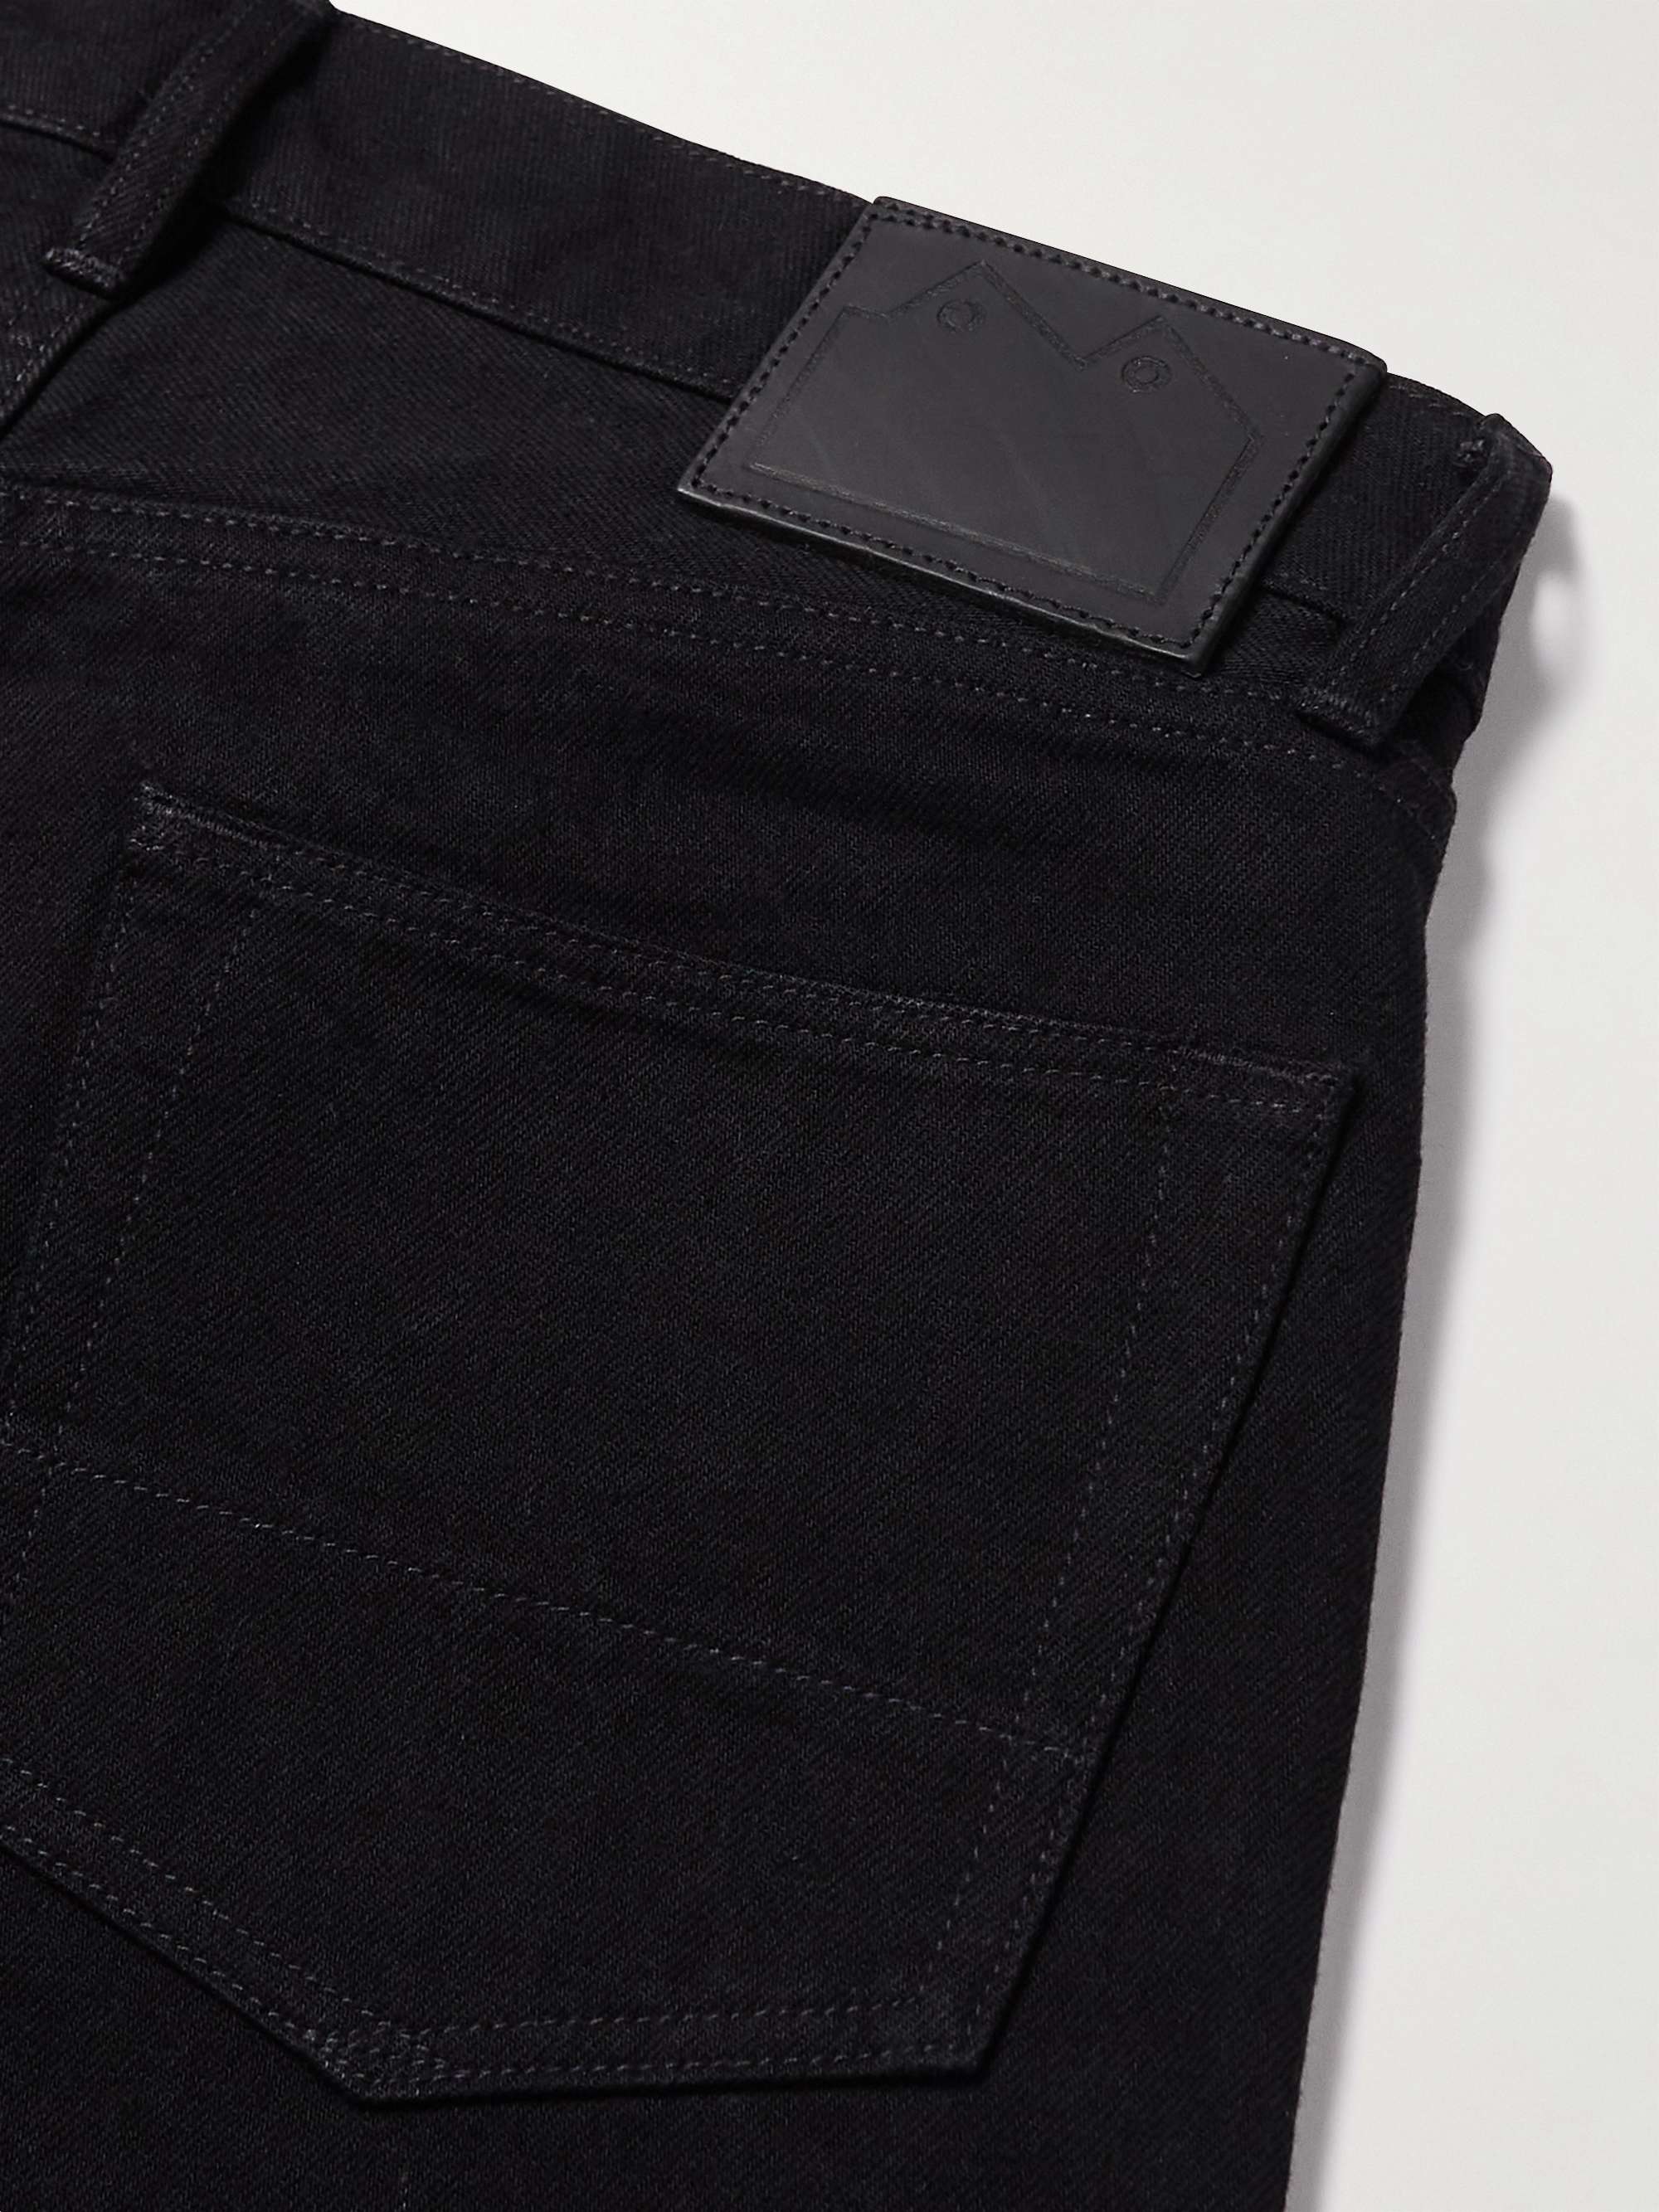 BLACKHORSE LANE ATELIERS NW8 Slim-Fit Organic Selvedge Denim Jeans